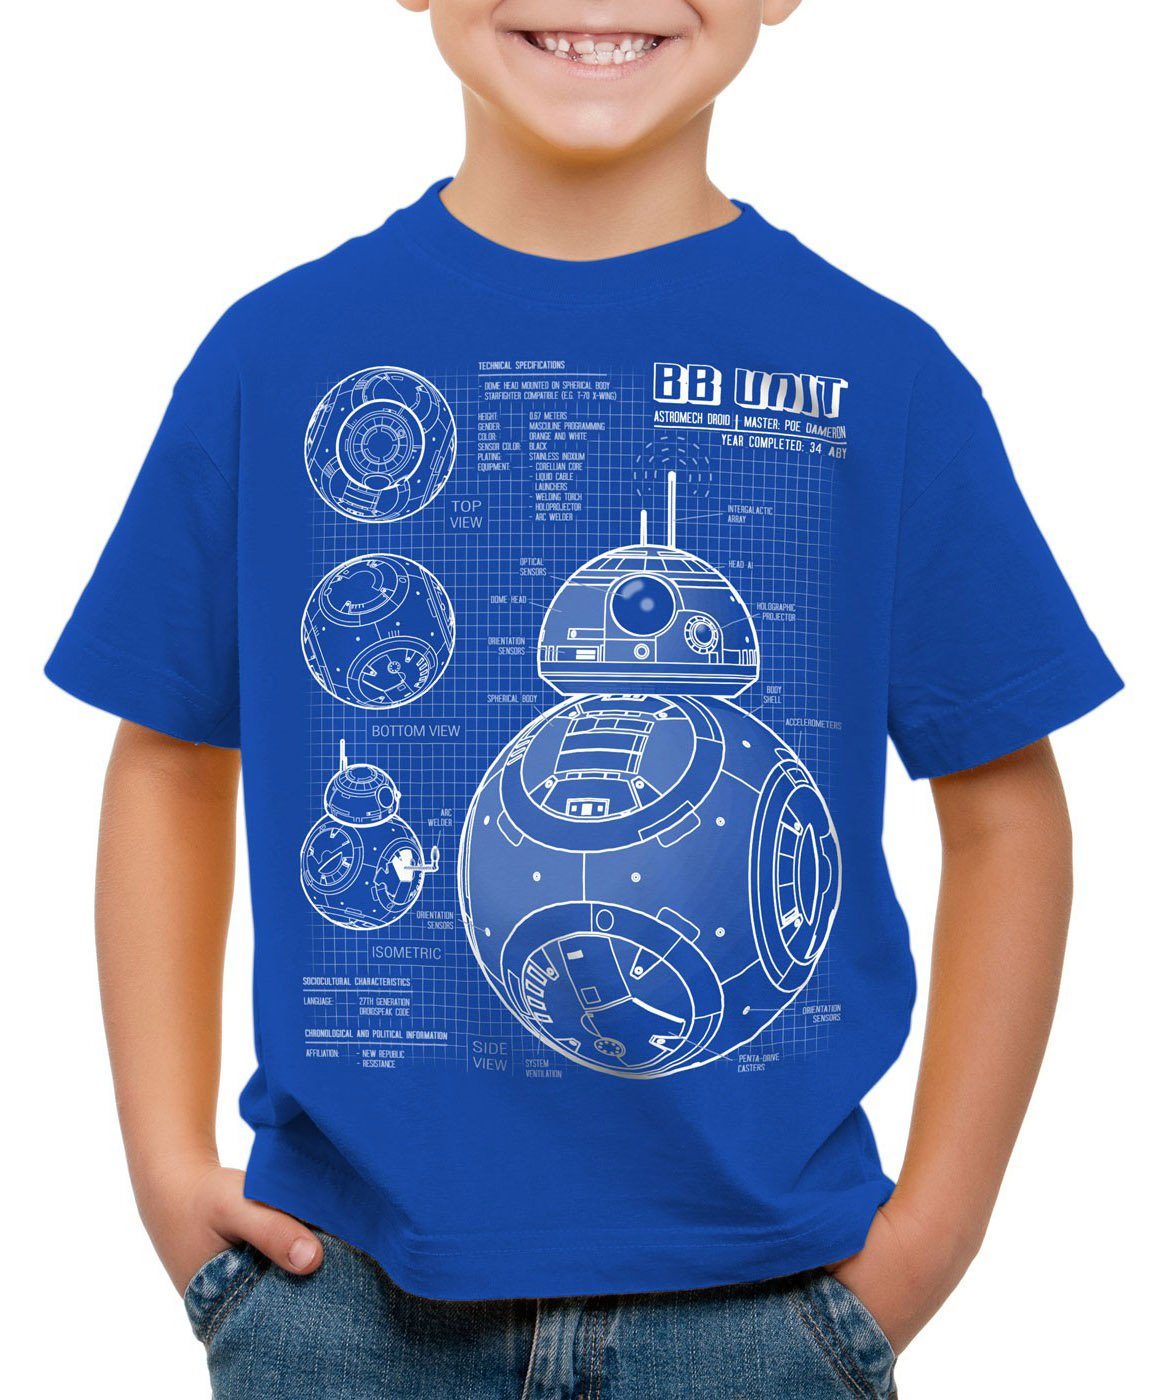 Luxus-Versandhandel style3 Print-Shirt Kinder T-Shirt BB blaupause Unit droide astromech